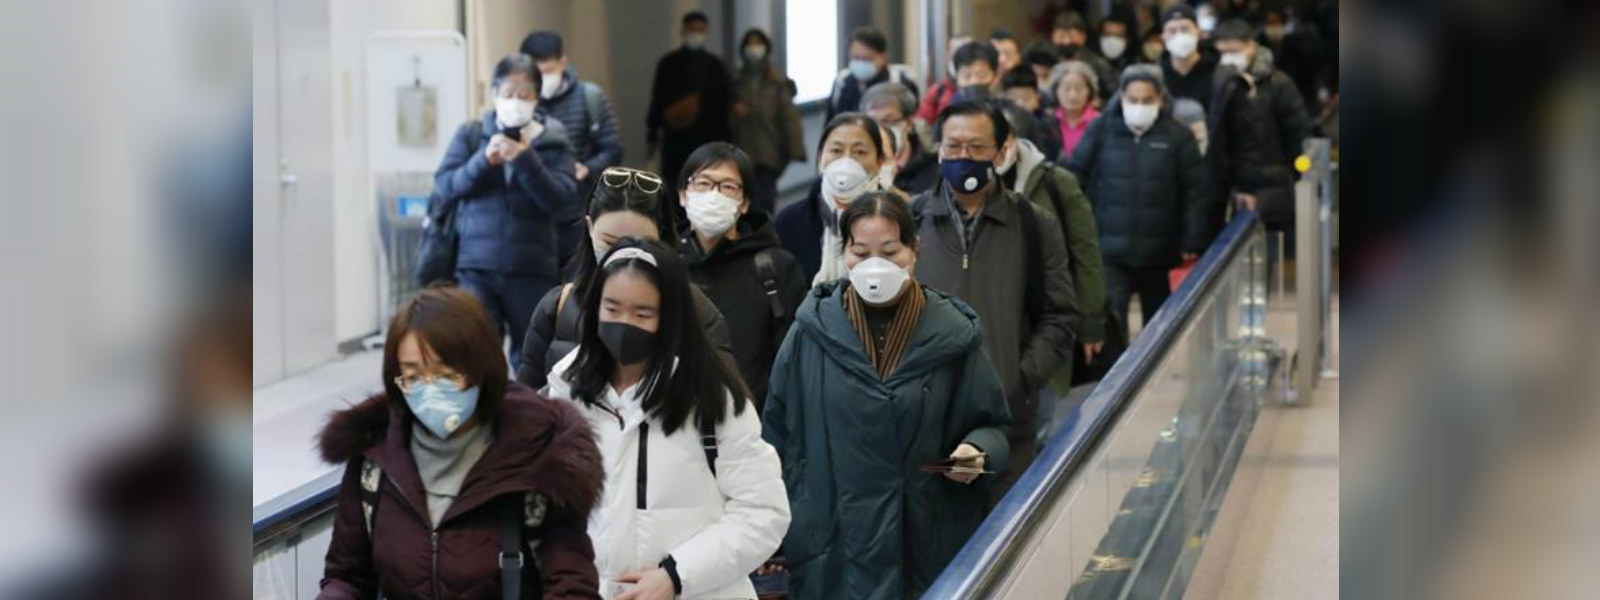 China coronavirus: Death toll rises as more cities shut down